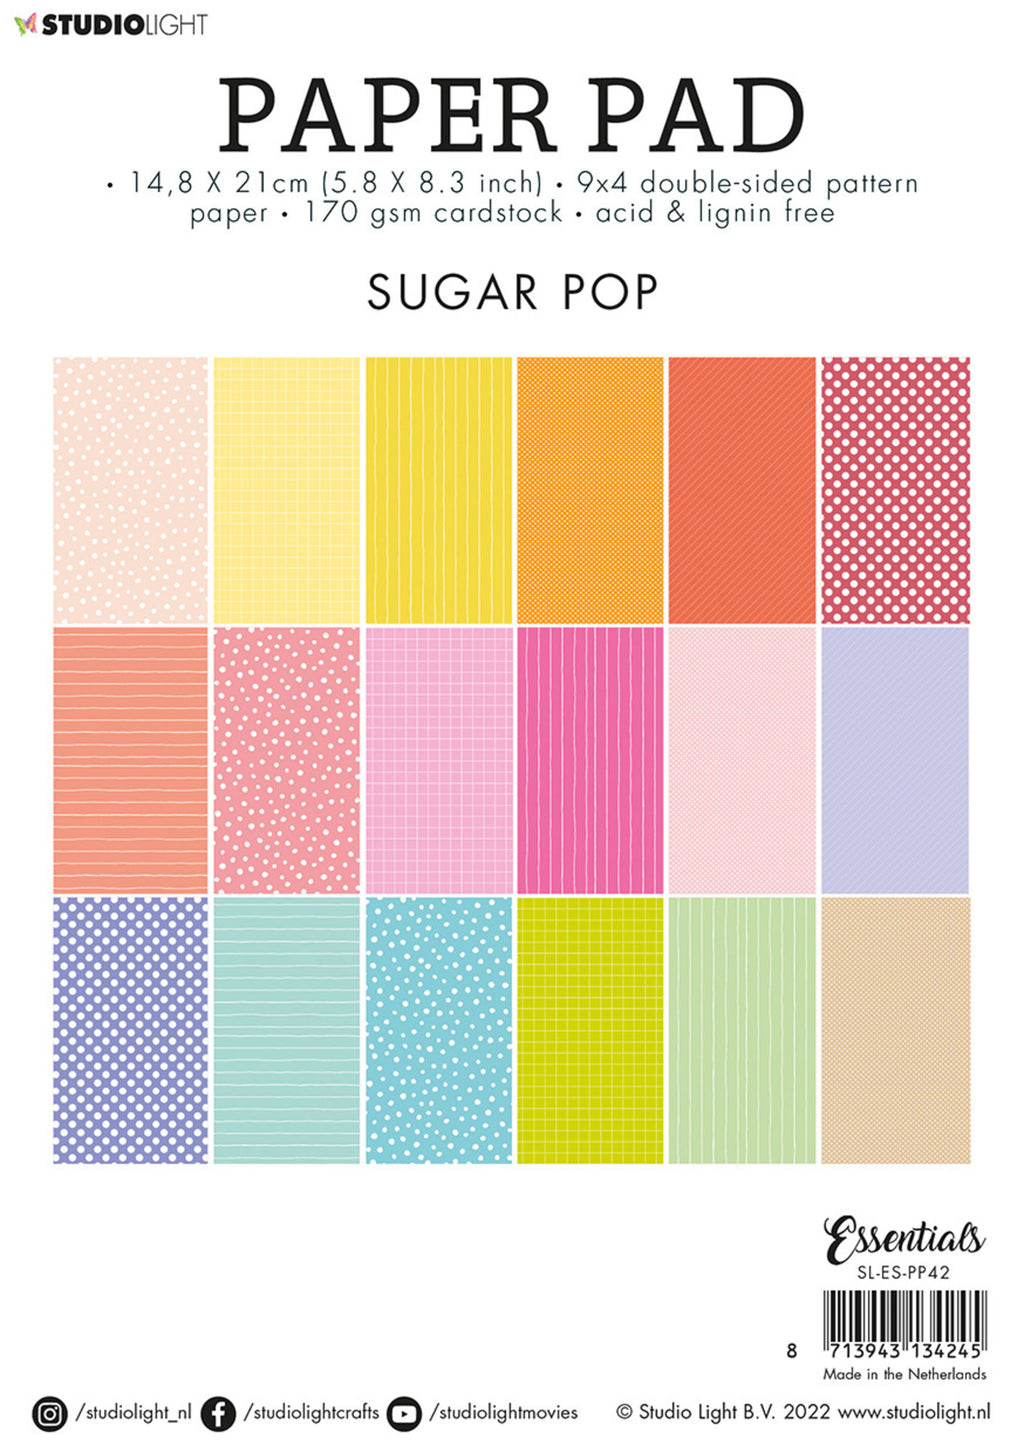 Studio Light - Essentials - Paper Pad - Sugar Pop